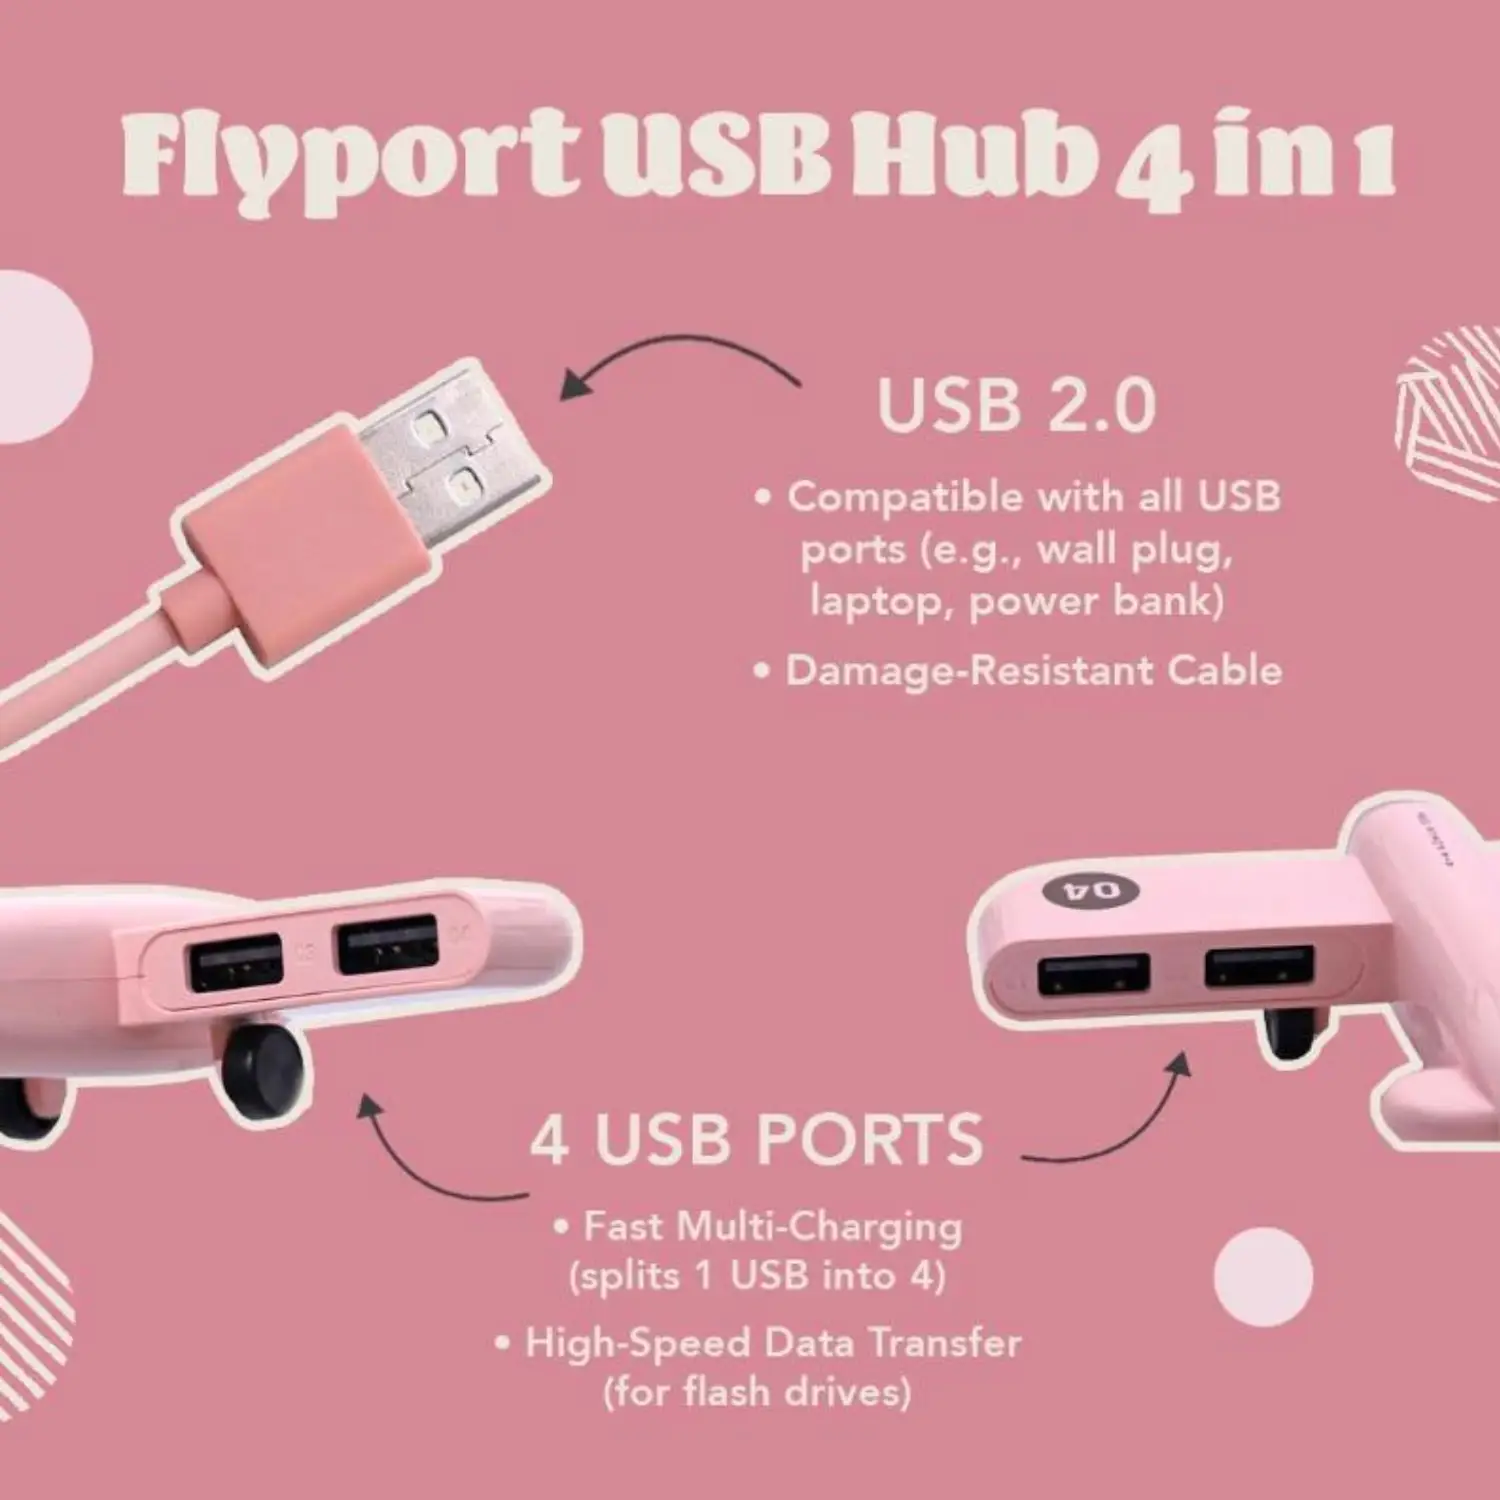 Flyport USB Hub